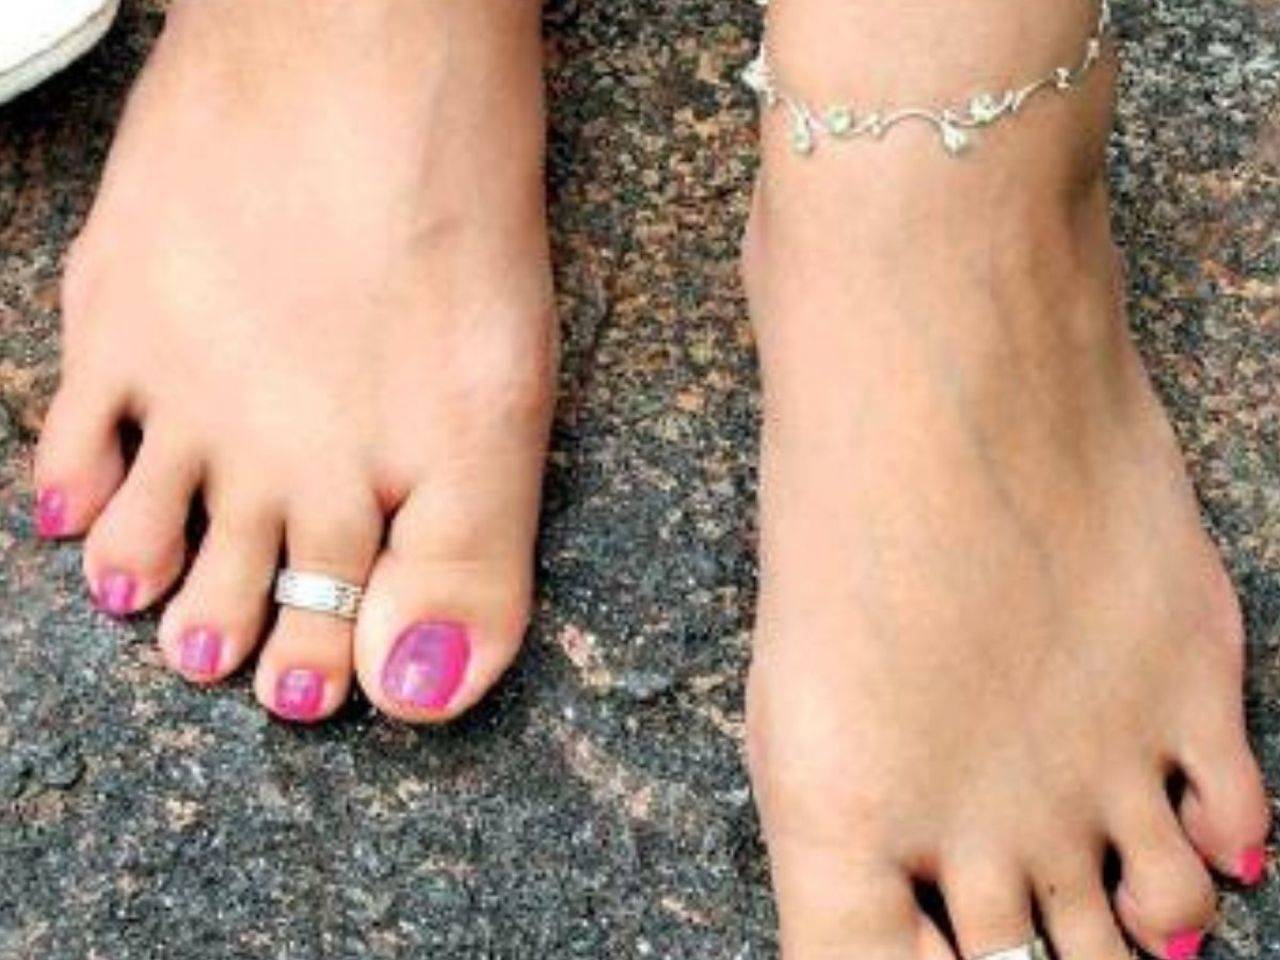 Bengalurus hottest new kink involves happy feet Bengaluru News